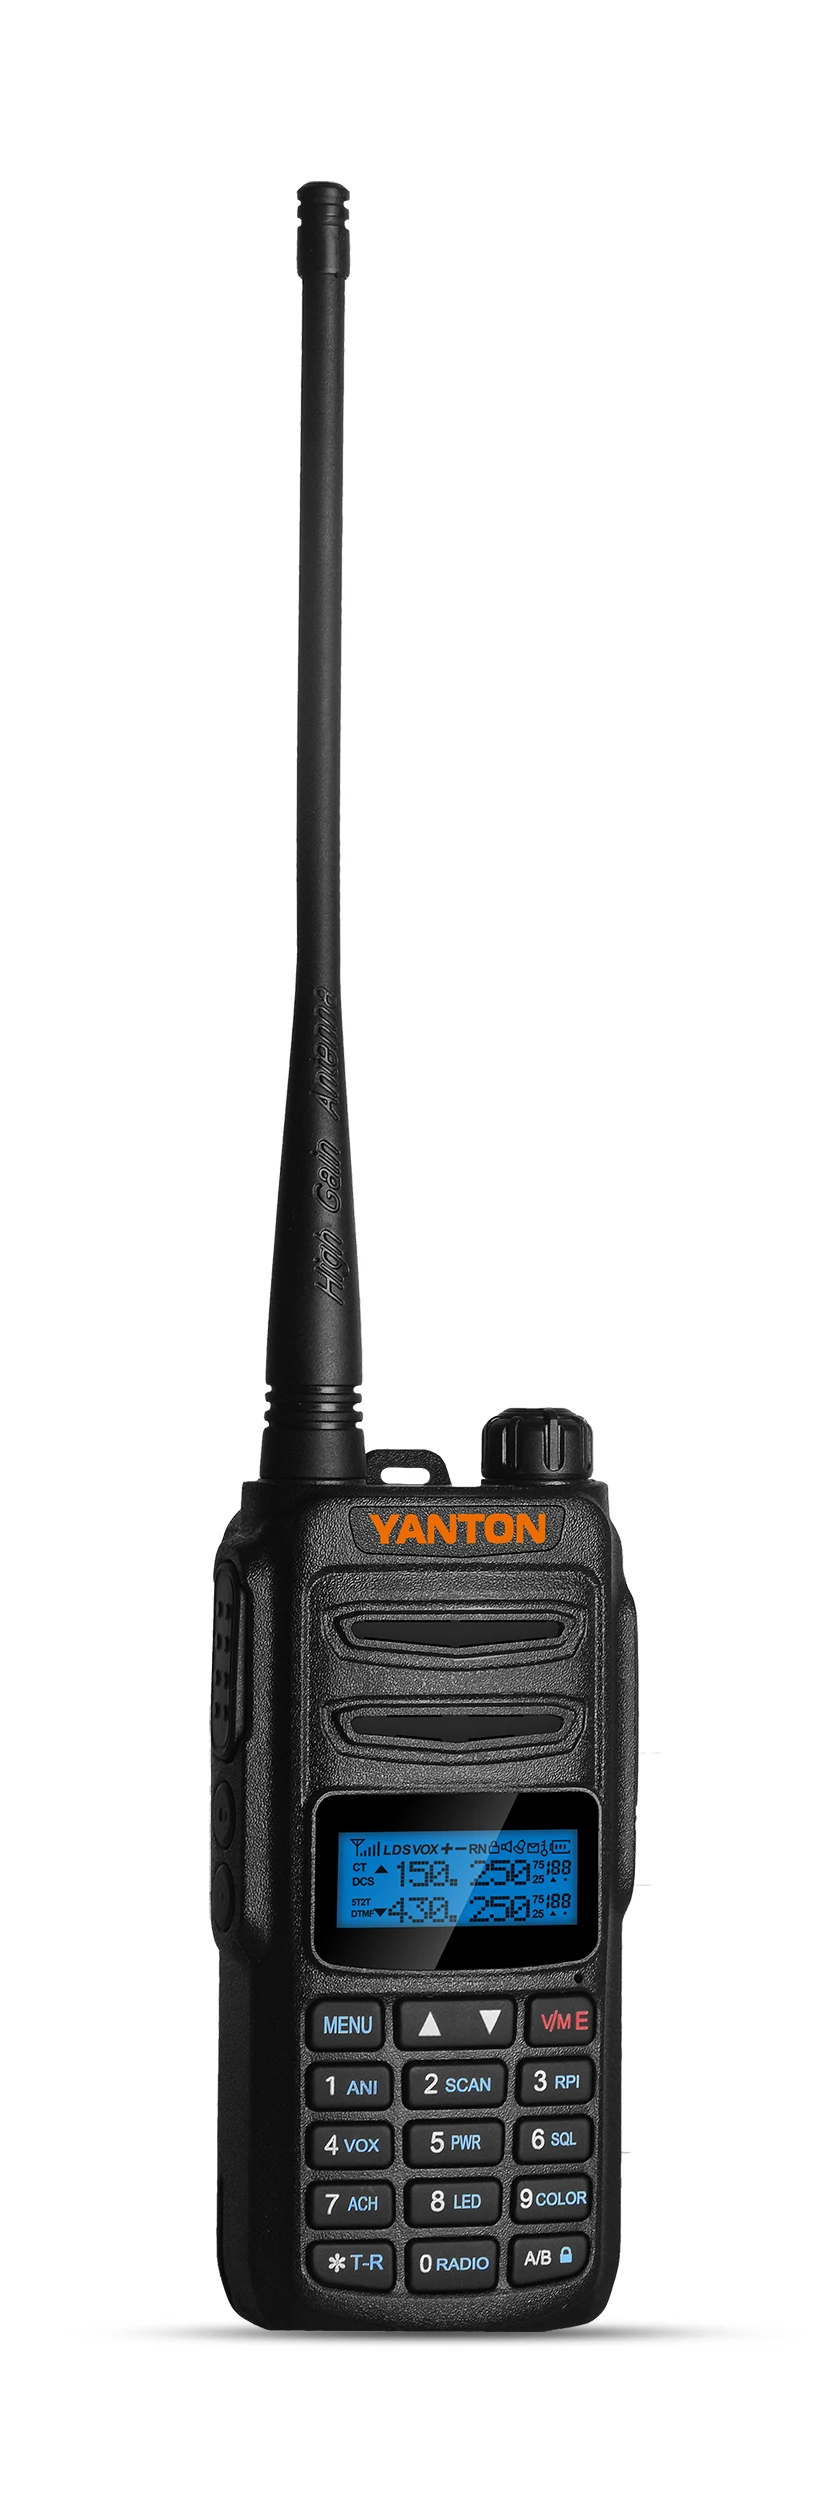 YANTON T-UV3D Walkie Talkie VHF/UHF FM DTMF Dual Band Ham Two-way Radios Professional Wireless set 10Km enlarge